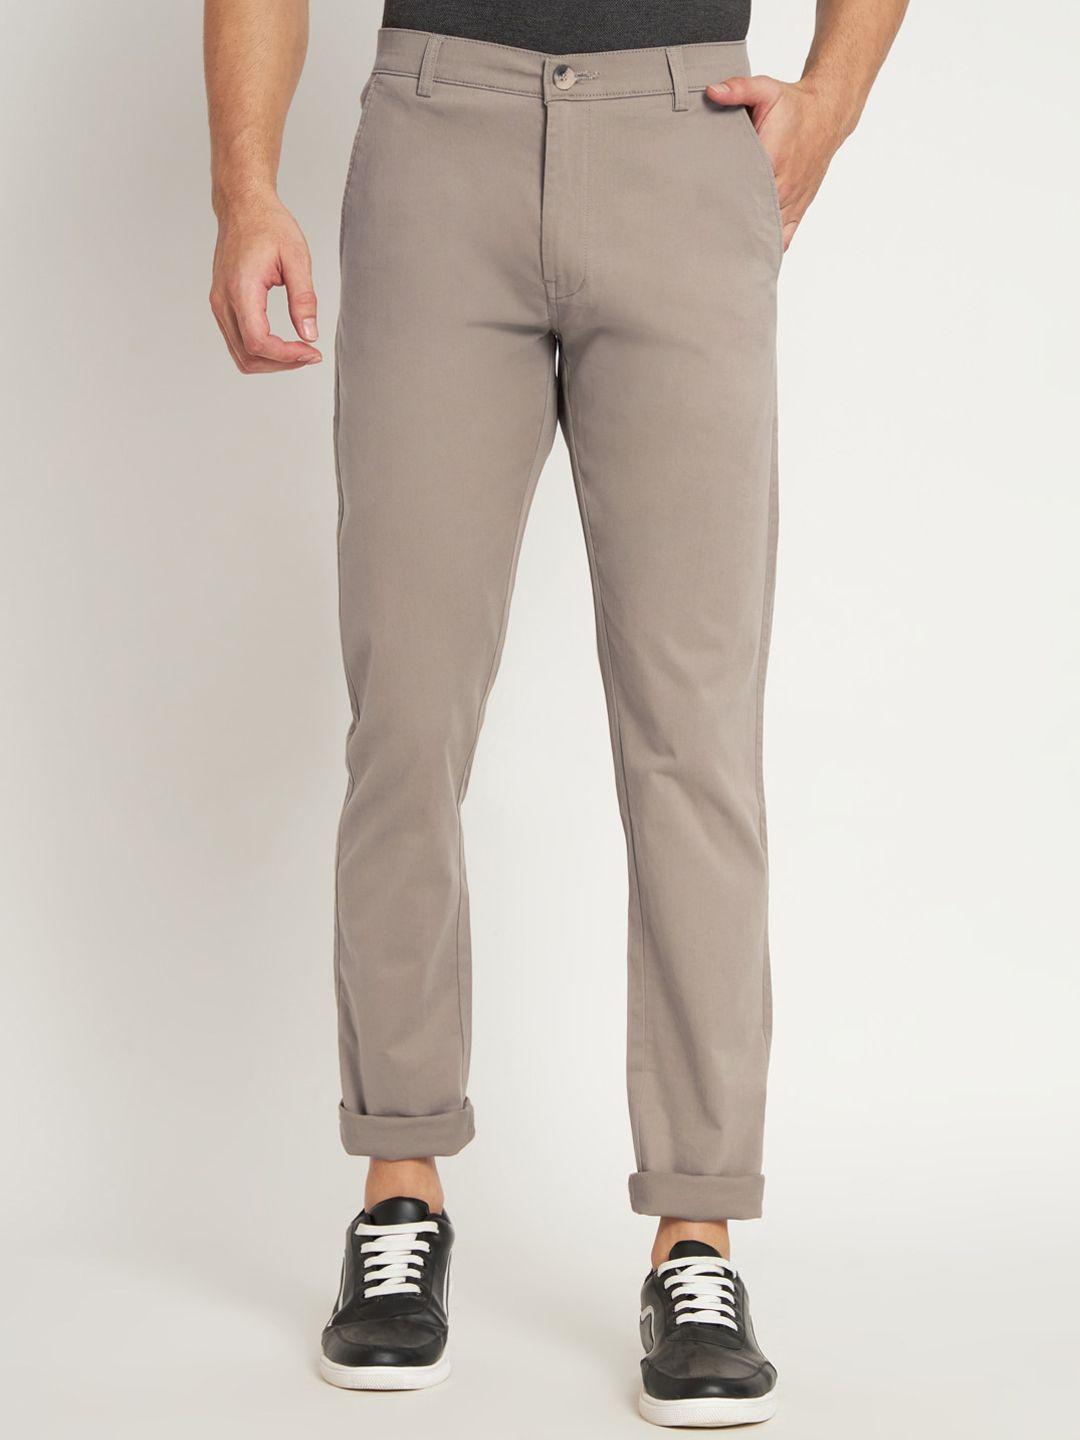 ragzo-men-slim-fit-low-rise-cotton-trousers